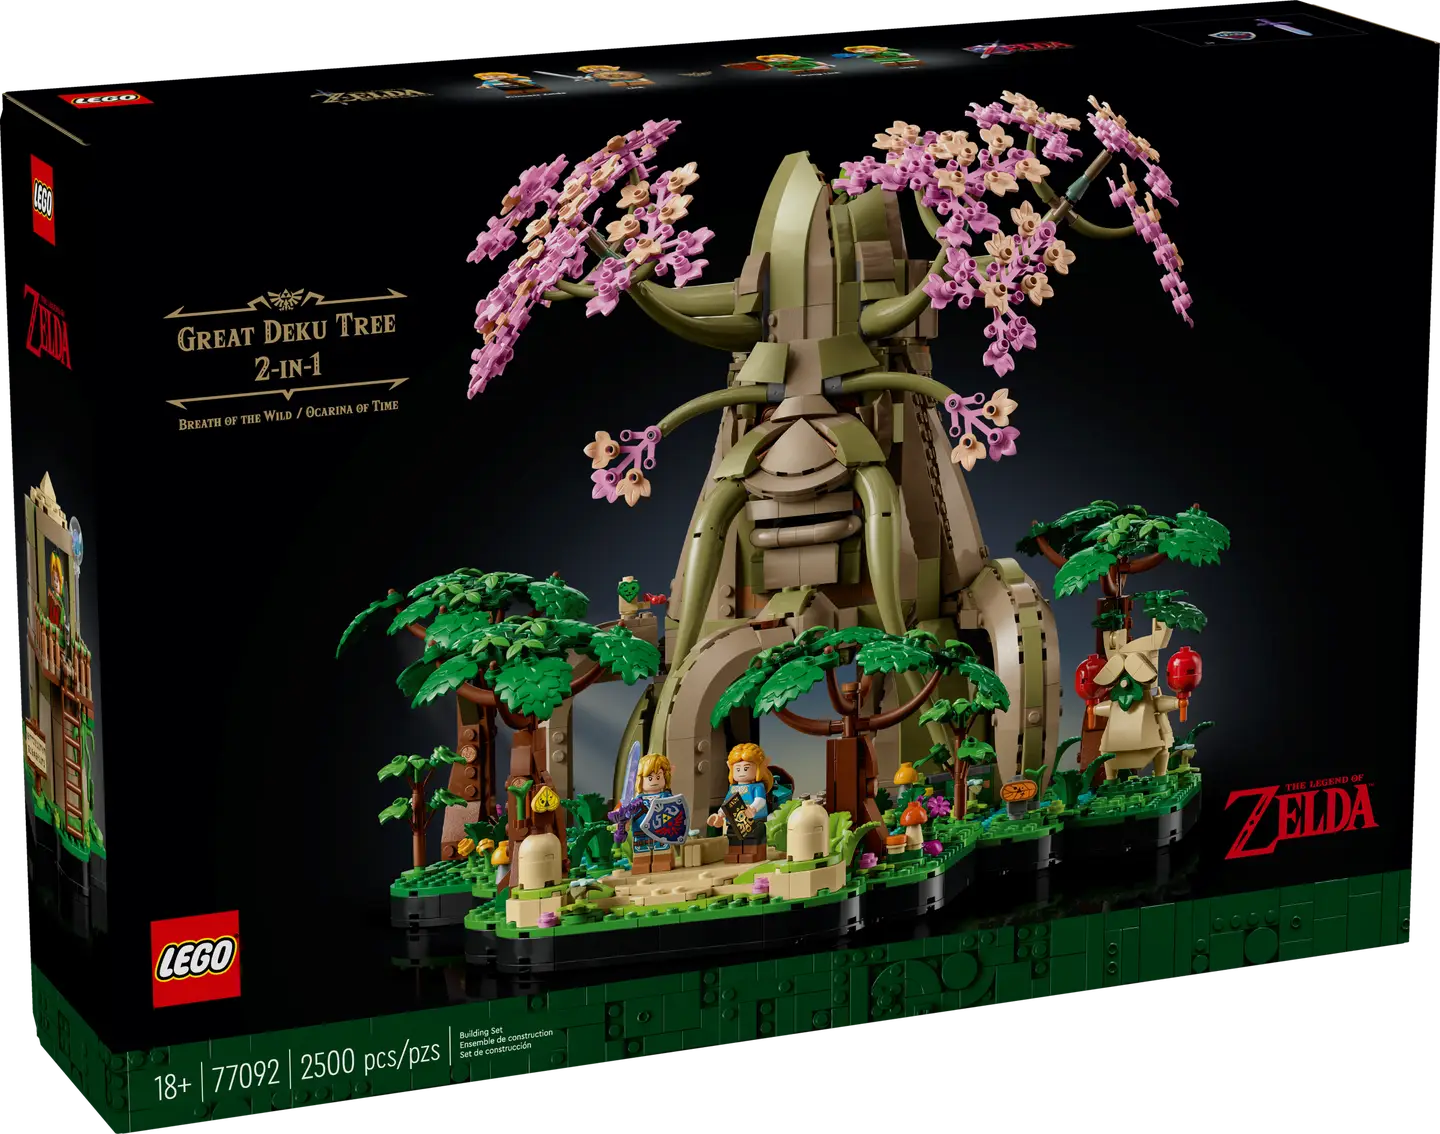 Lego The Legend of Zelda: Great Deku Tree officially launching in September